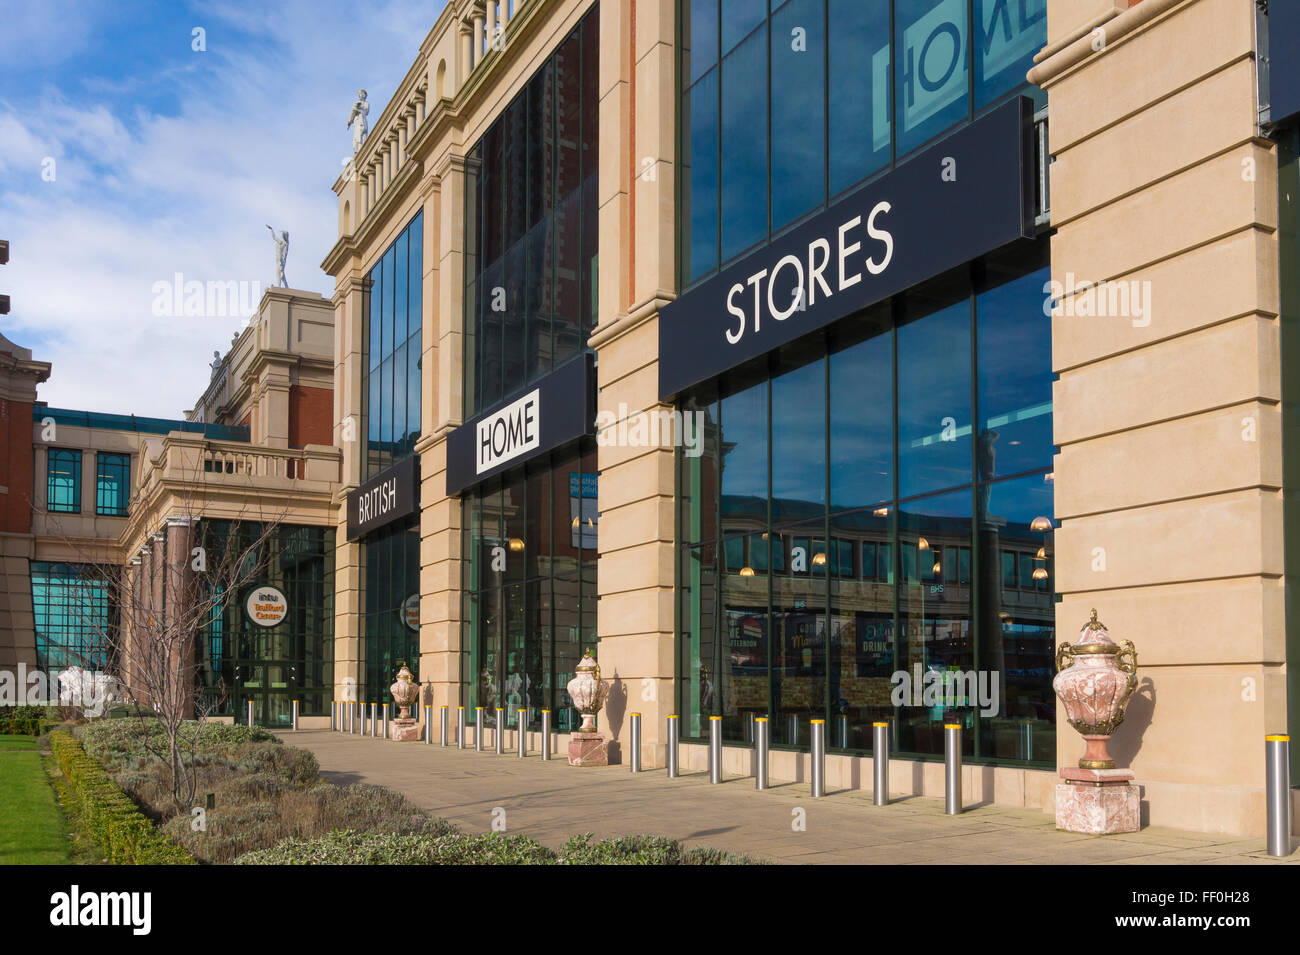 British Home Stores Sharps Store at Barton Square, Intu Trafford Centre, Manchester. Stock Photo